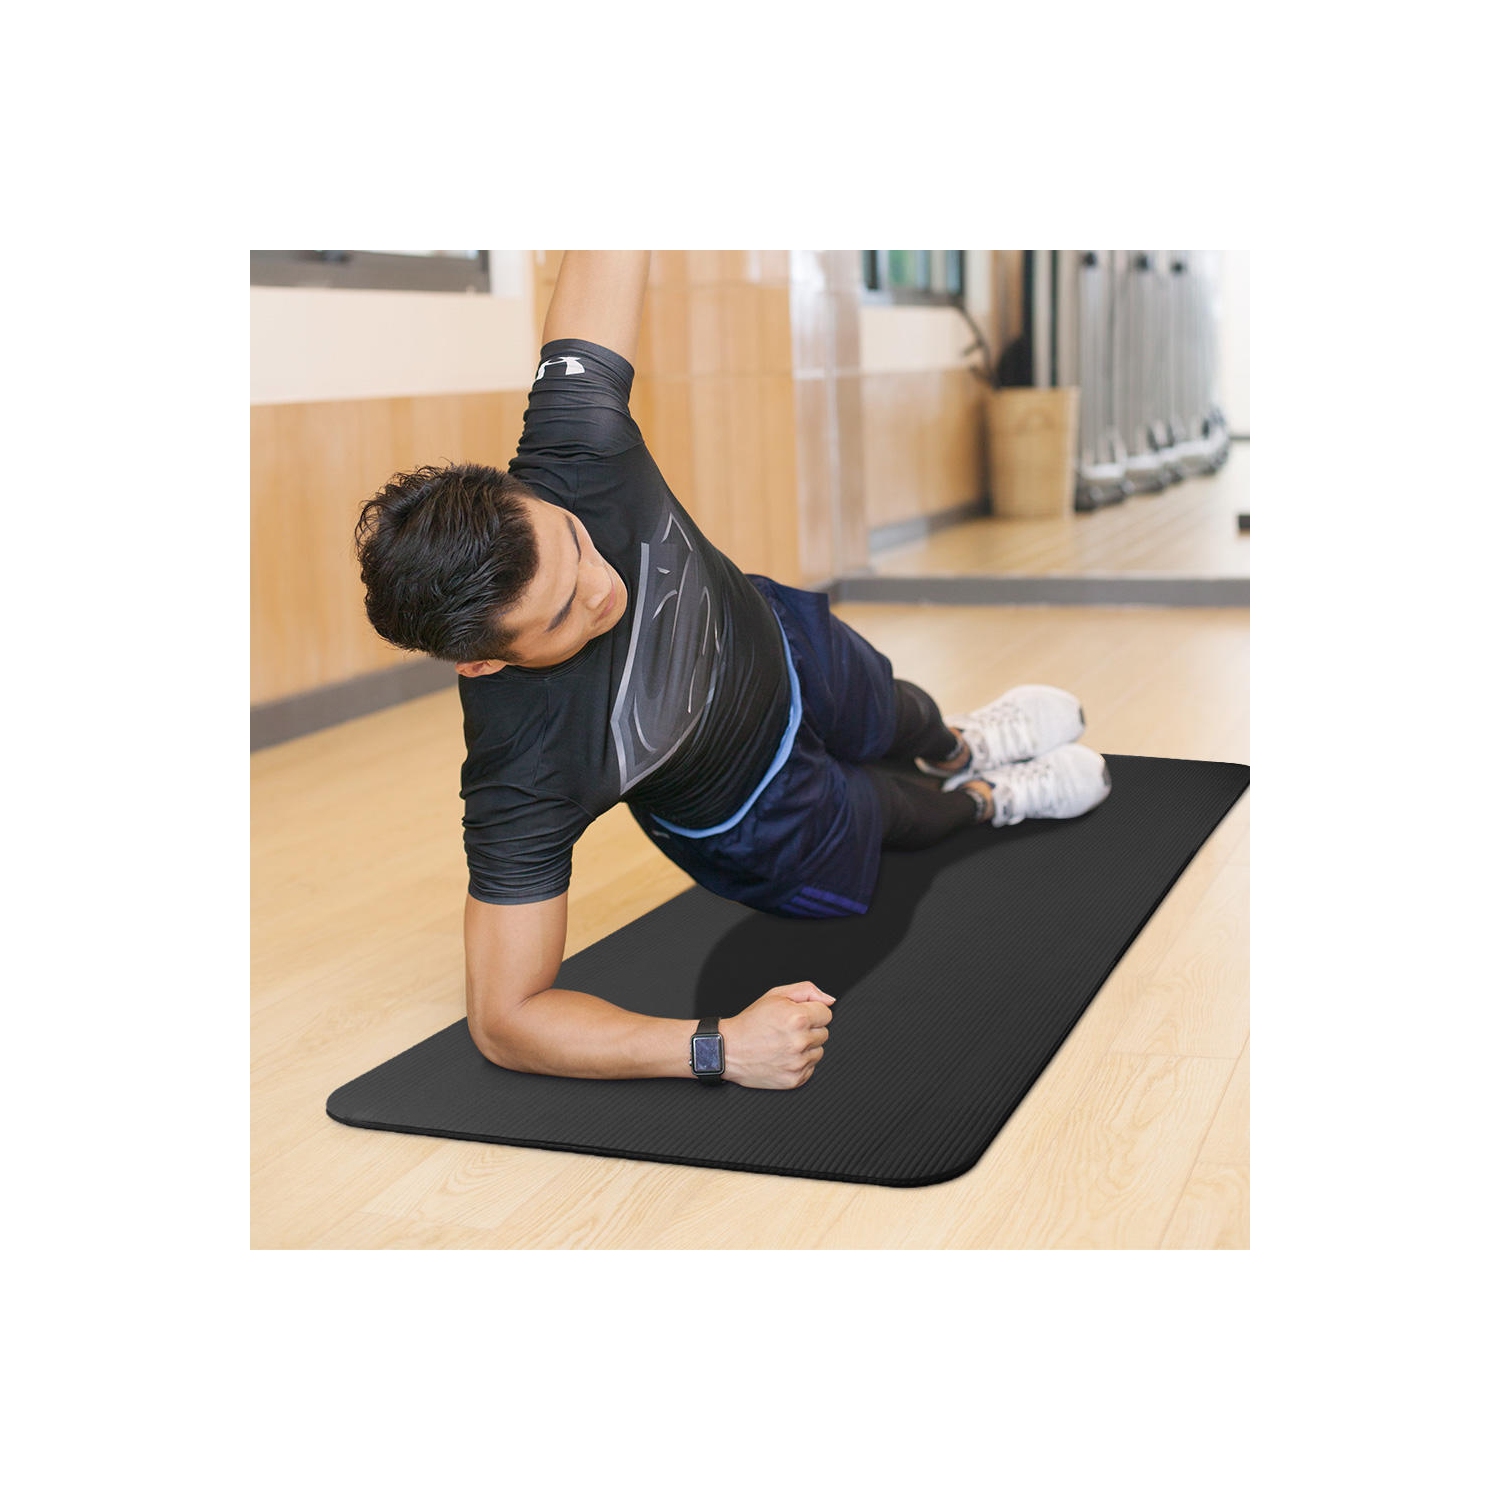 Extra thick yoga mat 183 * 61 * 1 cm thick non-slip yoga mat sports gym  soft Pilates folding mat fitness fitness equipment